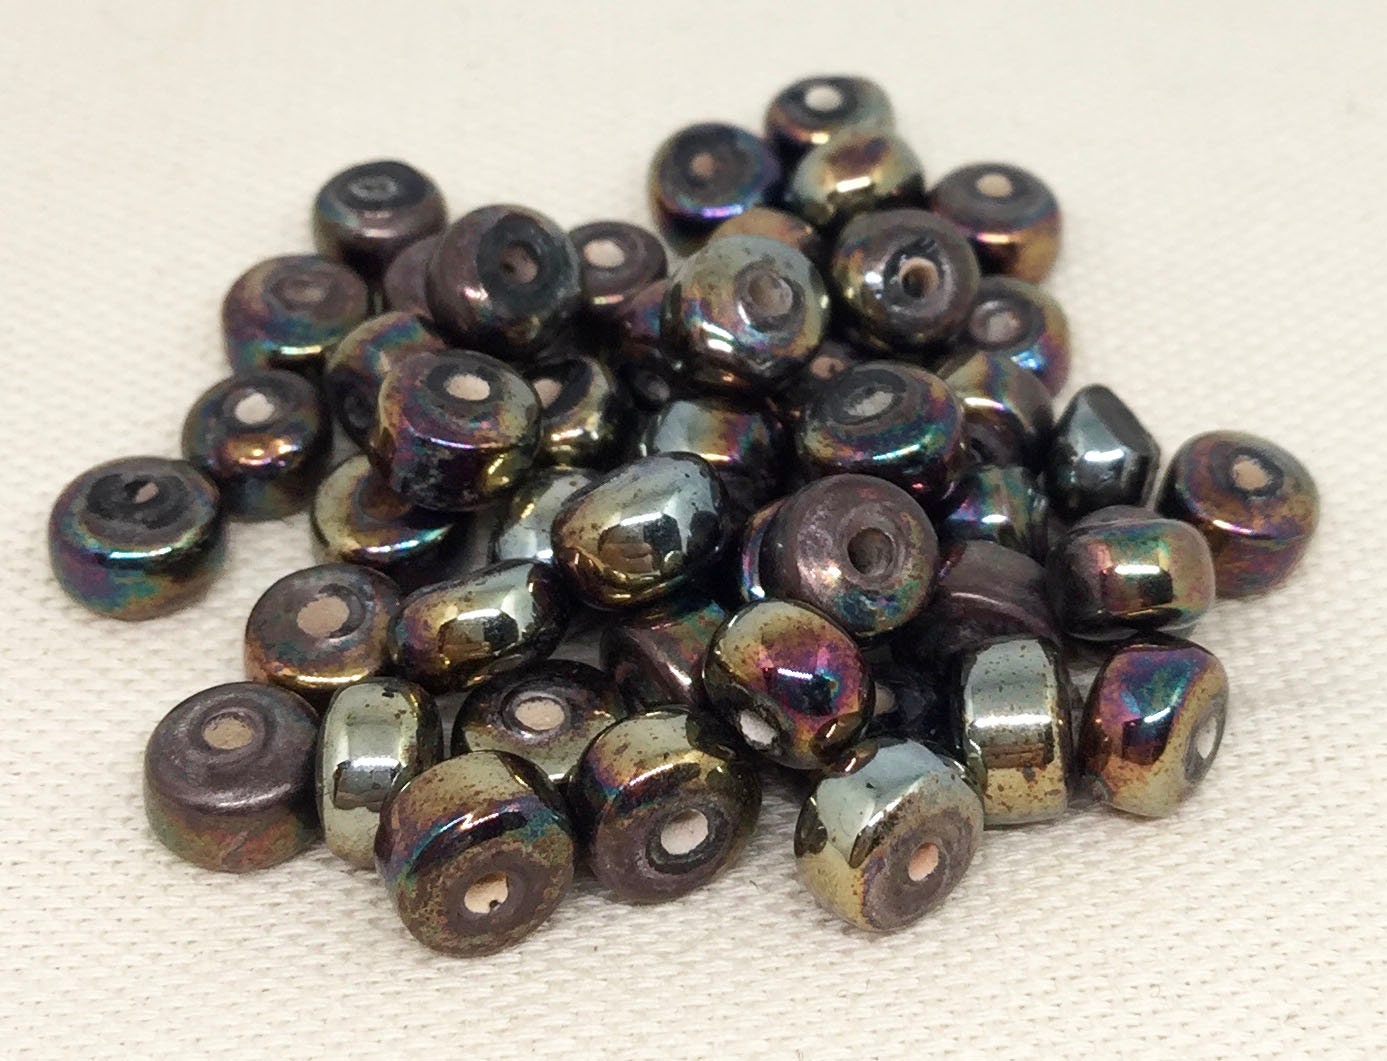  400 Black Matte Metallic Acrylic Large Hole Beads 10mm